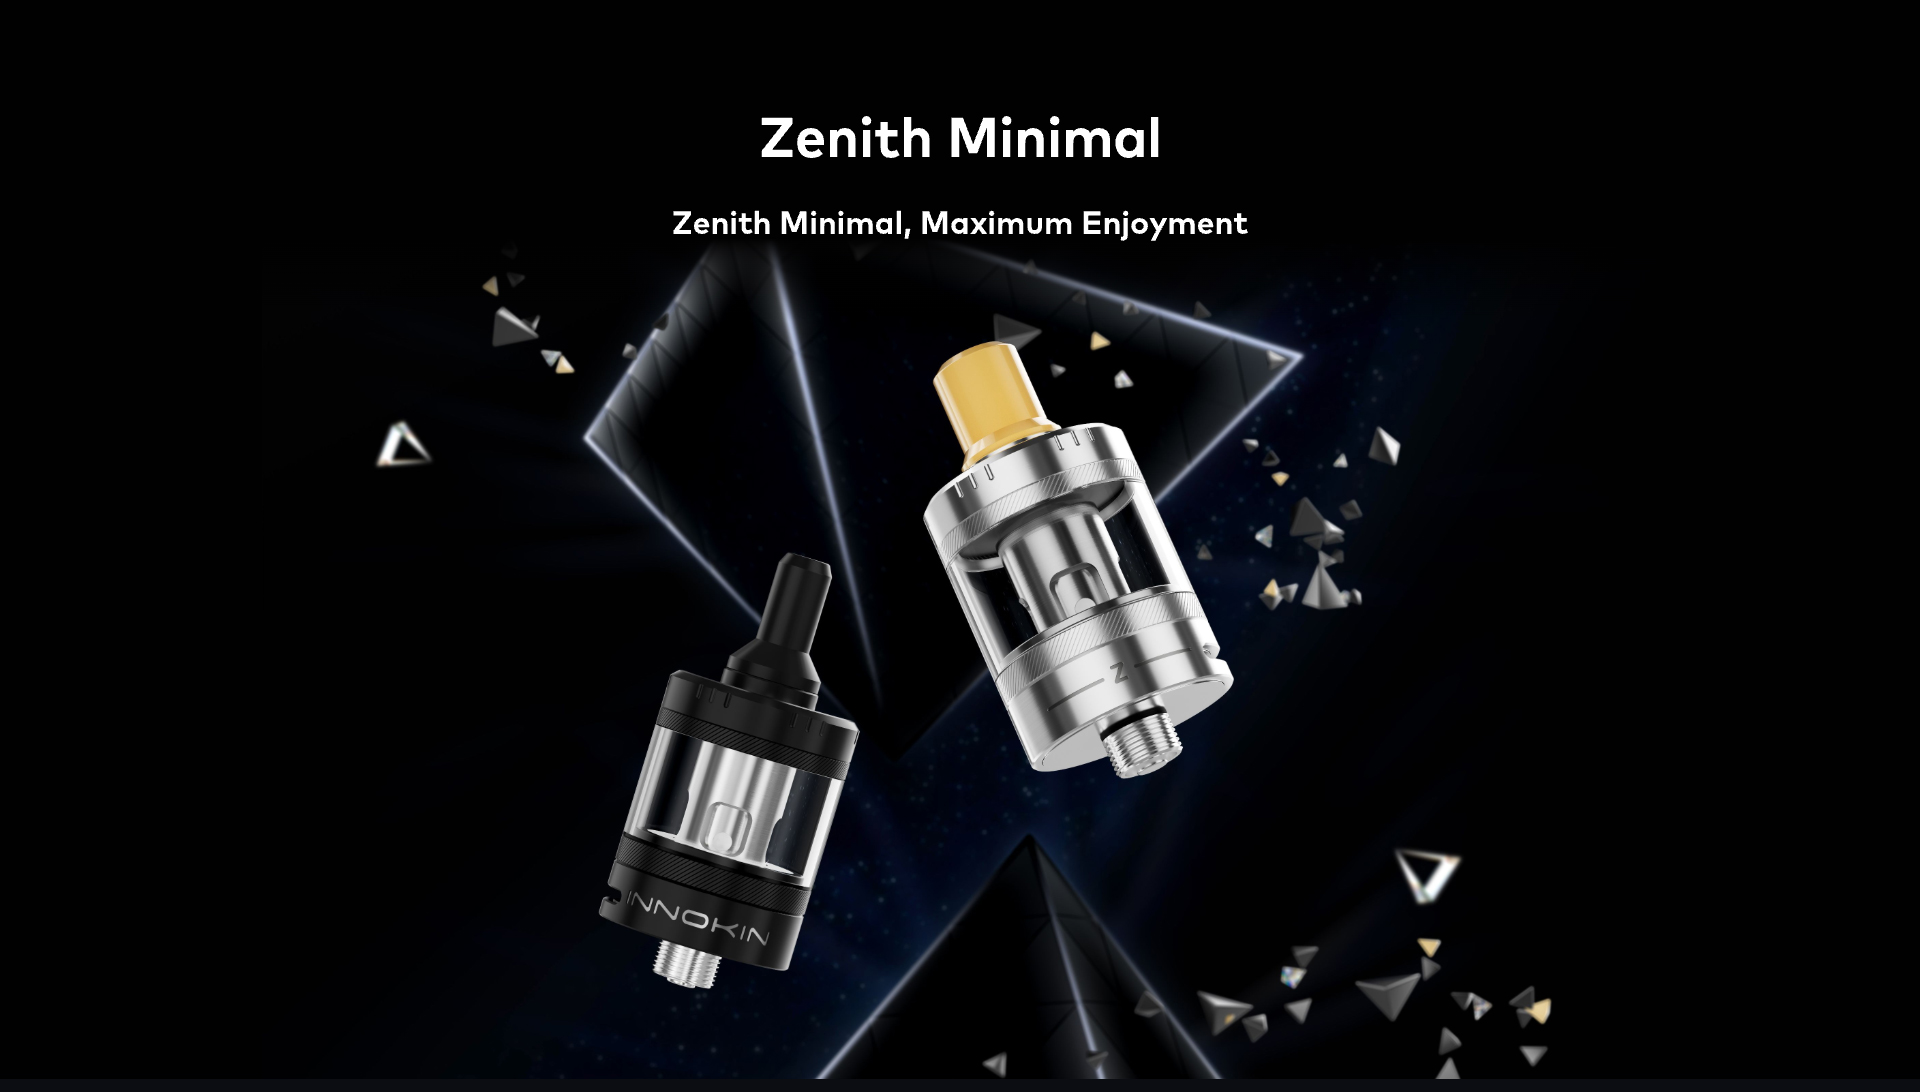 O Innokin Zenith Minimal είναι ο ολοκαίνουργιος ατμοποιητής από τη σειρά Zenith κατασκευασμένος από την Innokin, σχεδιασμένος για να σας προσφέρει την καλύτερη απόδοση ατμίσματος σε μινιμαλιστική μορφή.